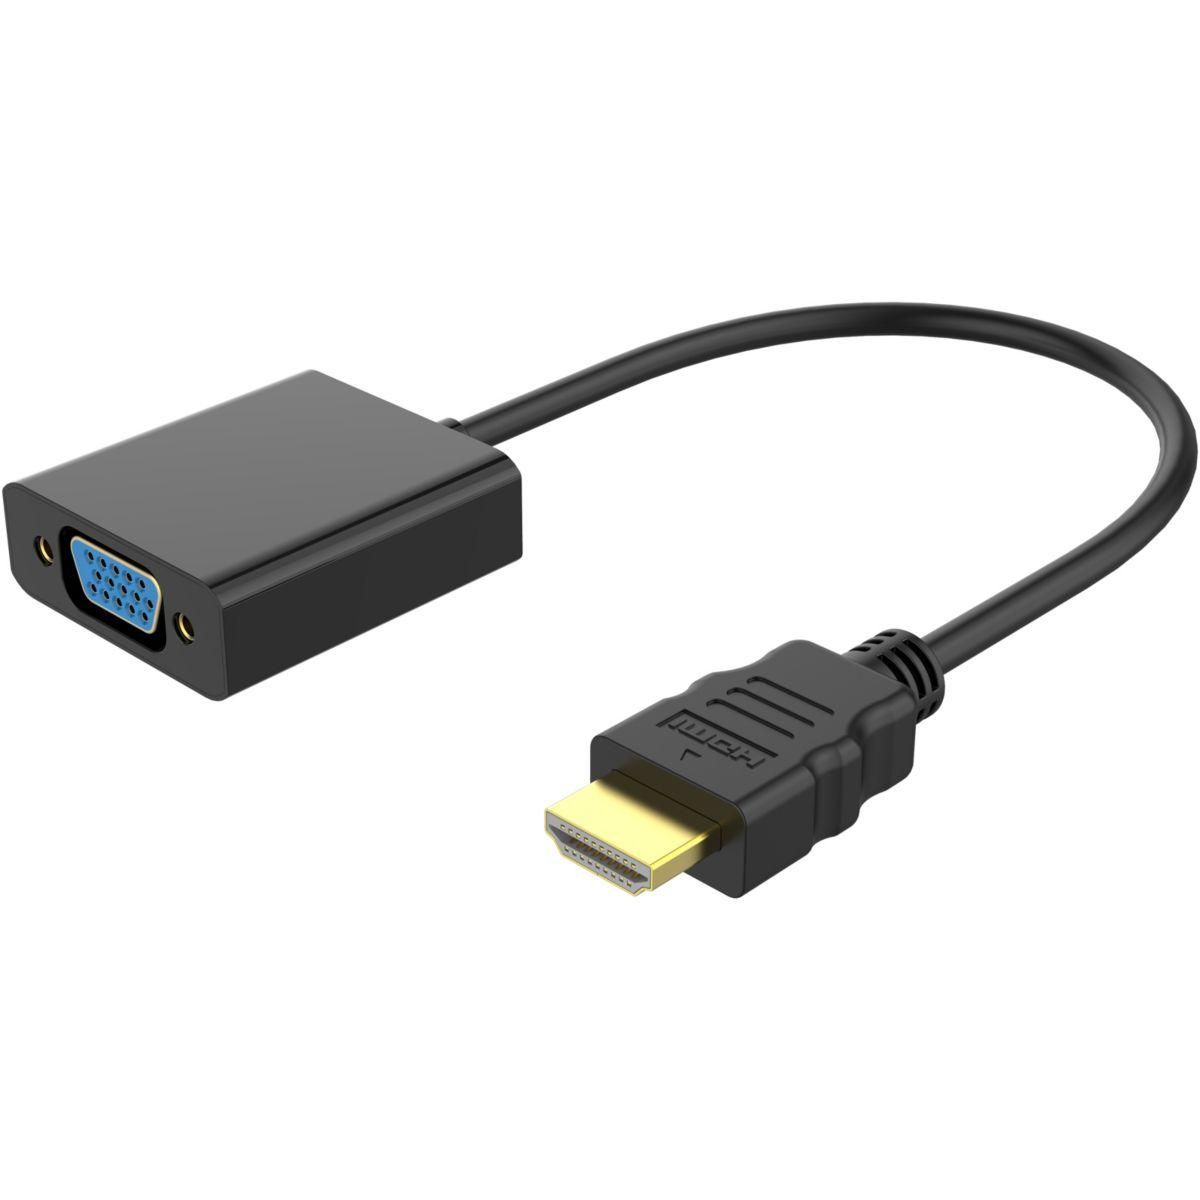 Hdmi And More Adaptateur - Convertisseur - HDMI vers VGA à prix pas cher